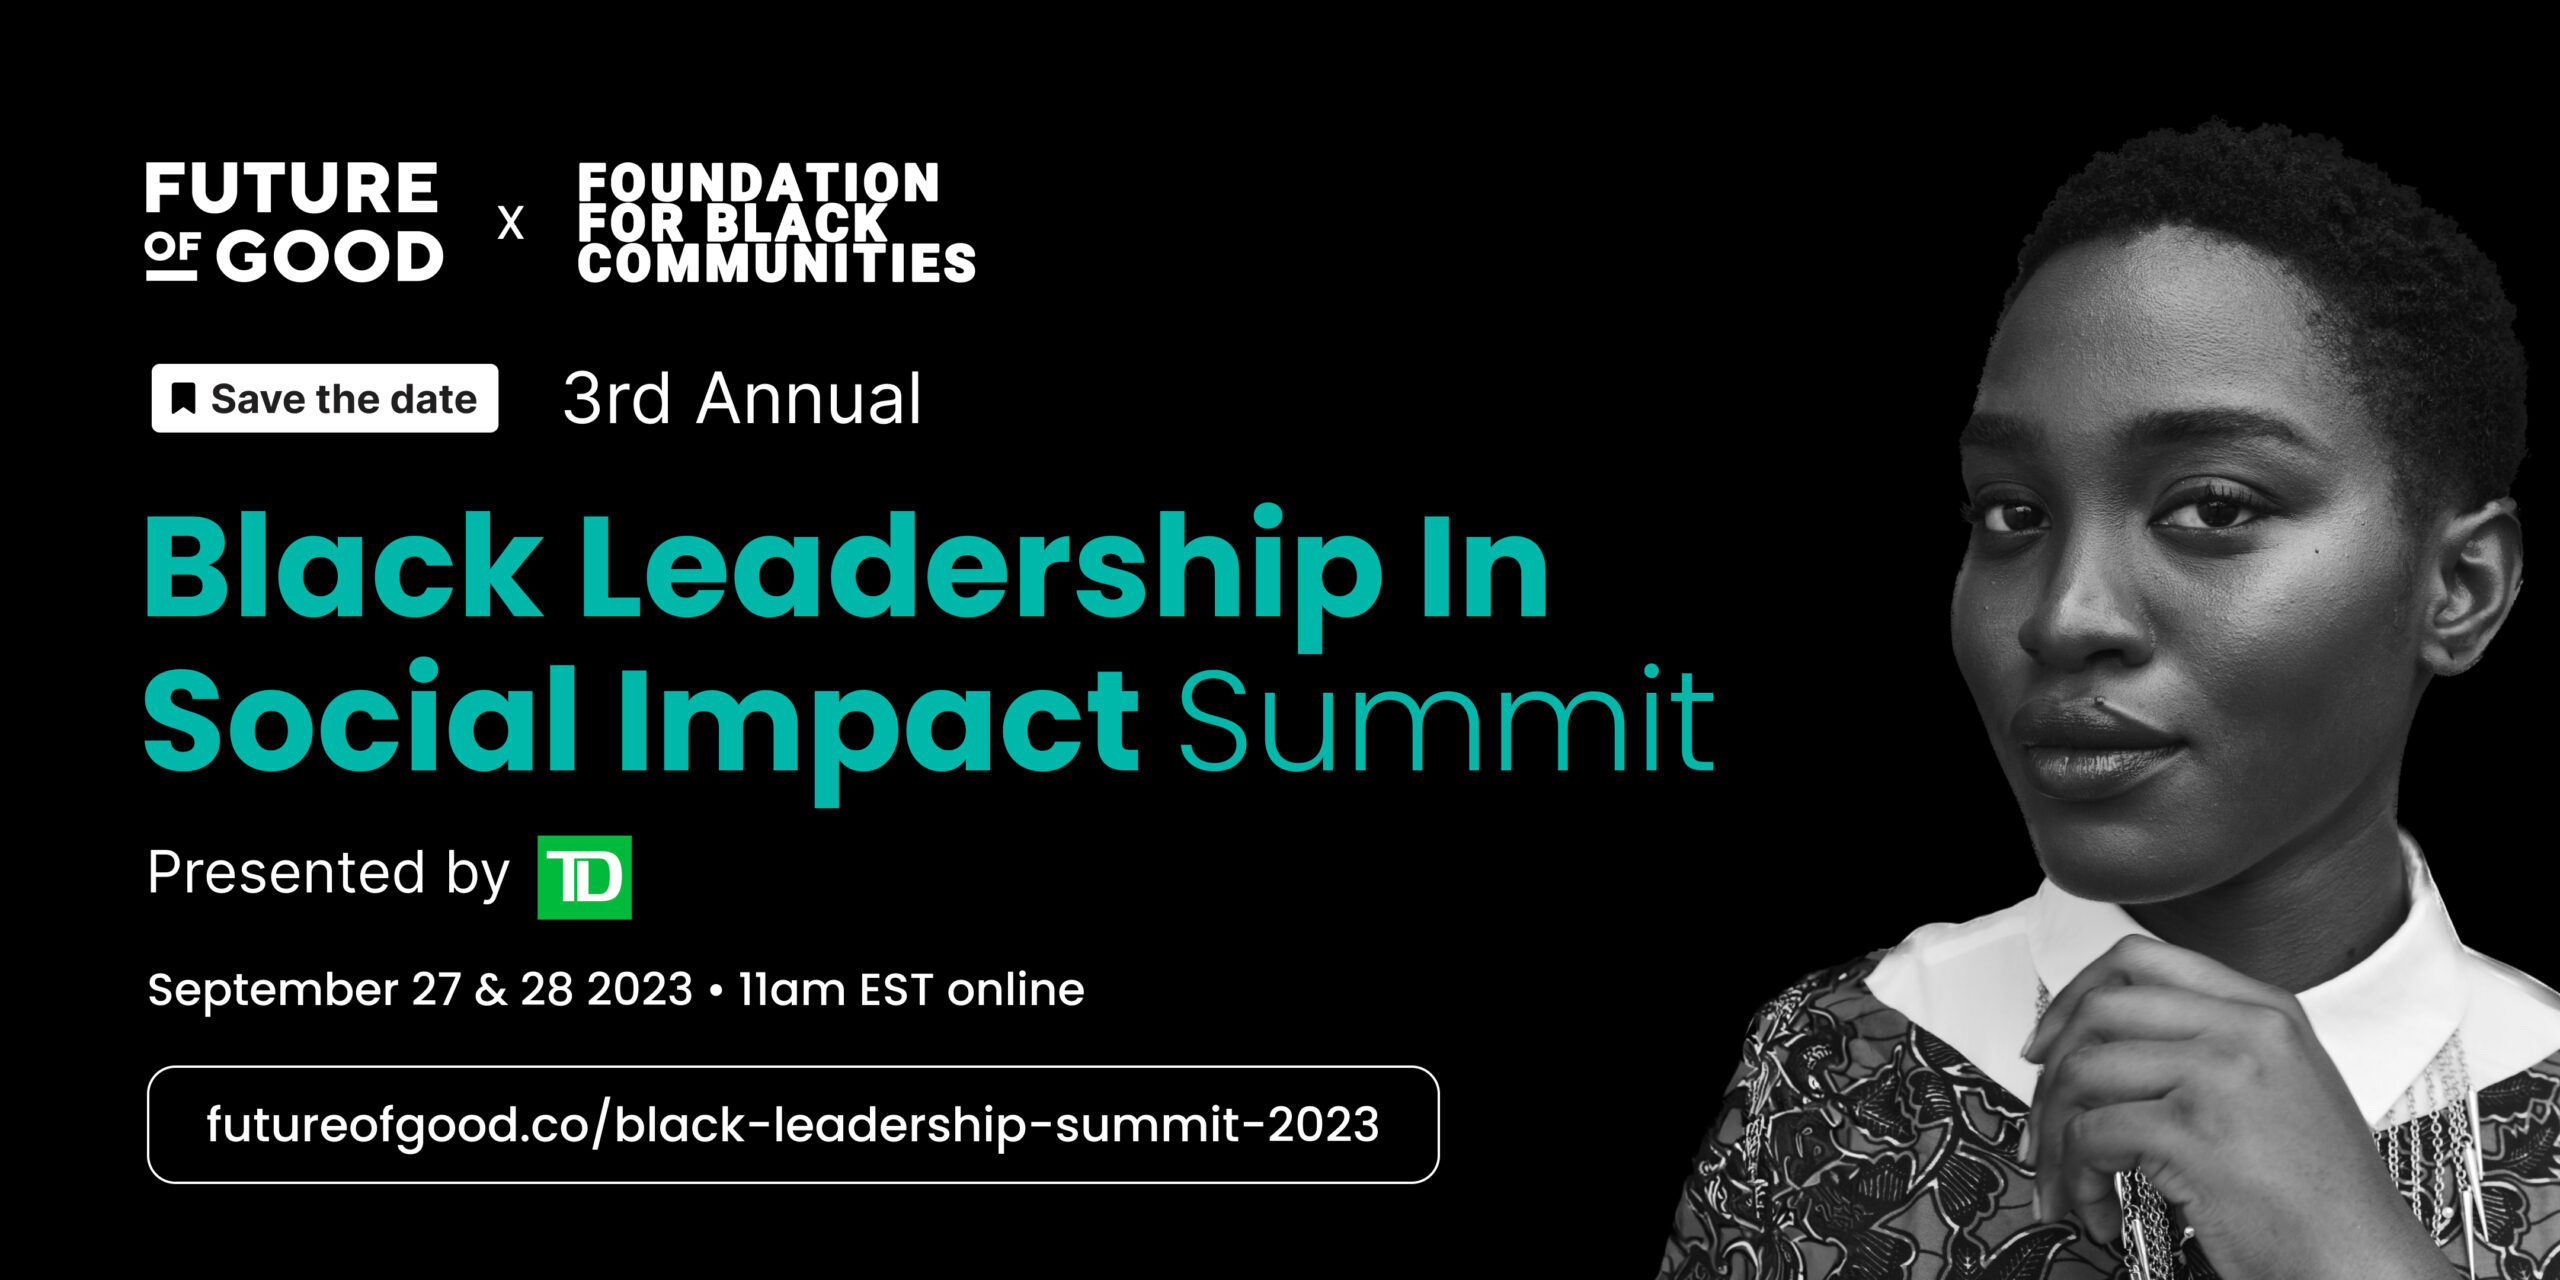 Black Leadership Summit 2023 Foundation for Black Communities (FFBC)